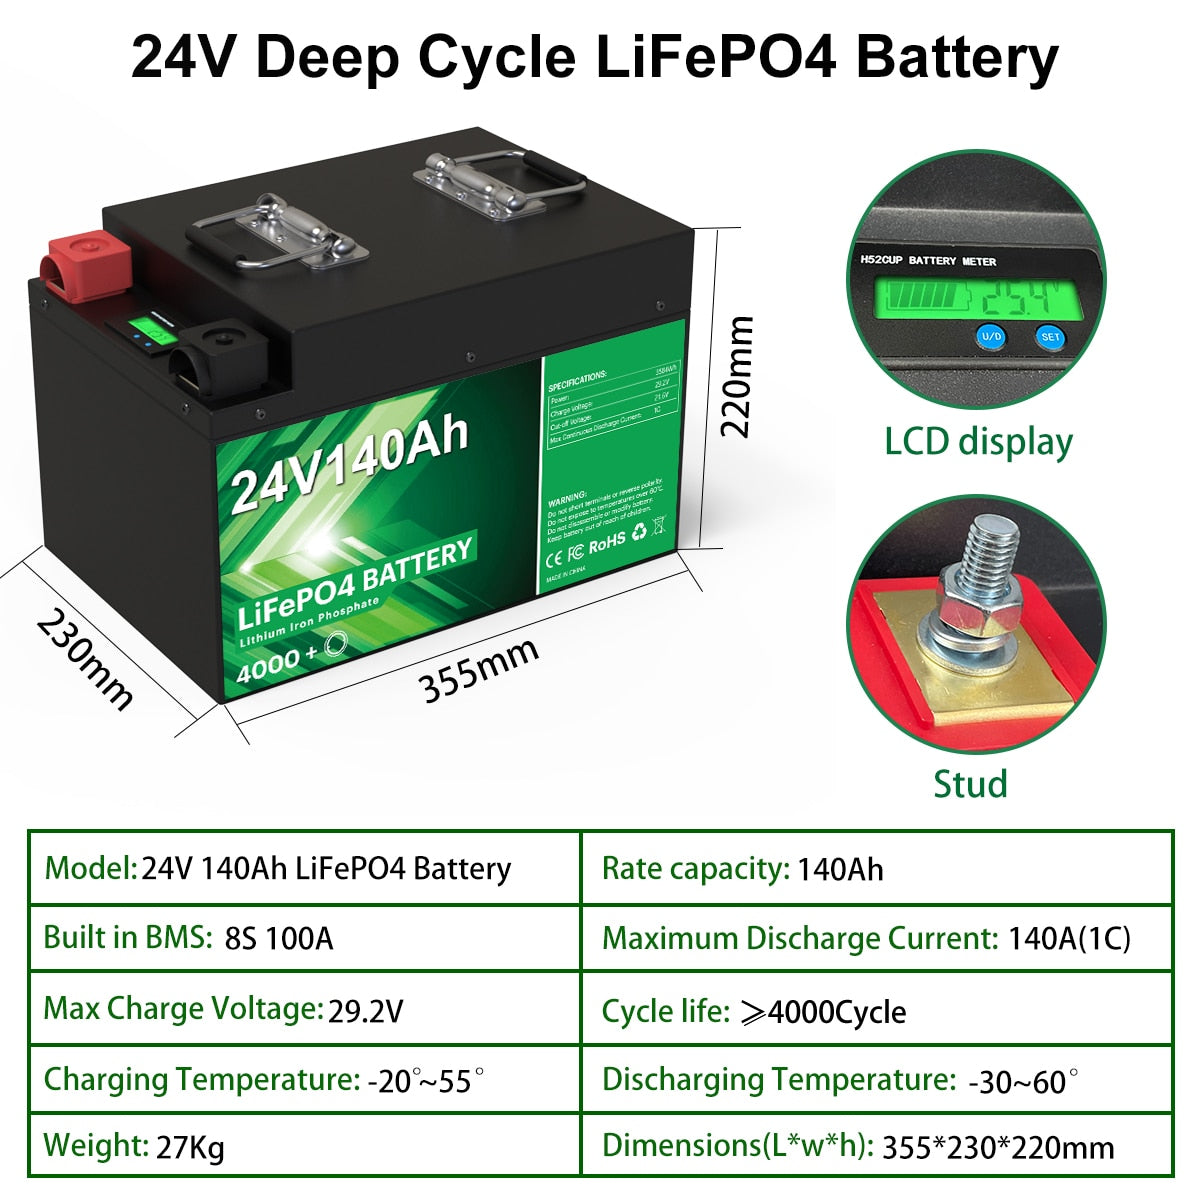 Paquete de batería LiFePO4 24V 300Ah 200Ah 100Ah - 6000 ciclos 25.6V 7680Wh 8S 200A BMS RV Carrito de golf Batería de litio recargable Sin impuestos